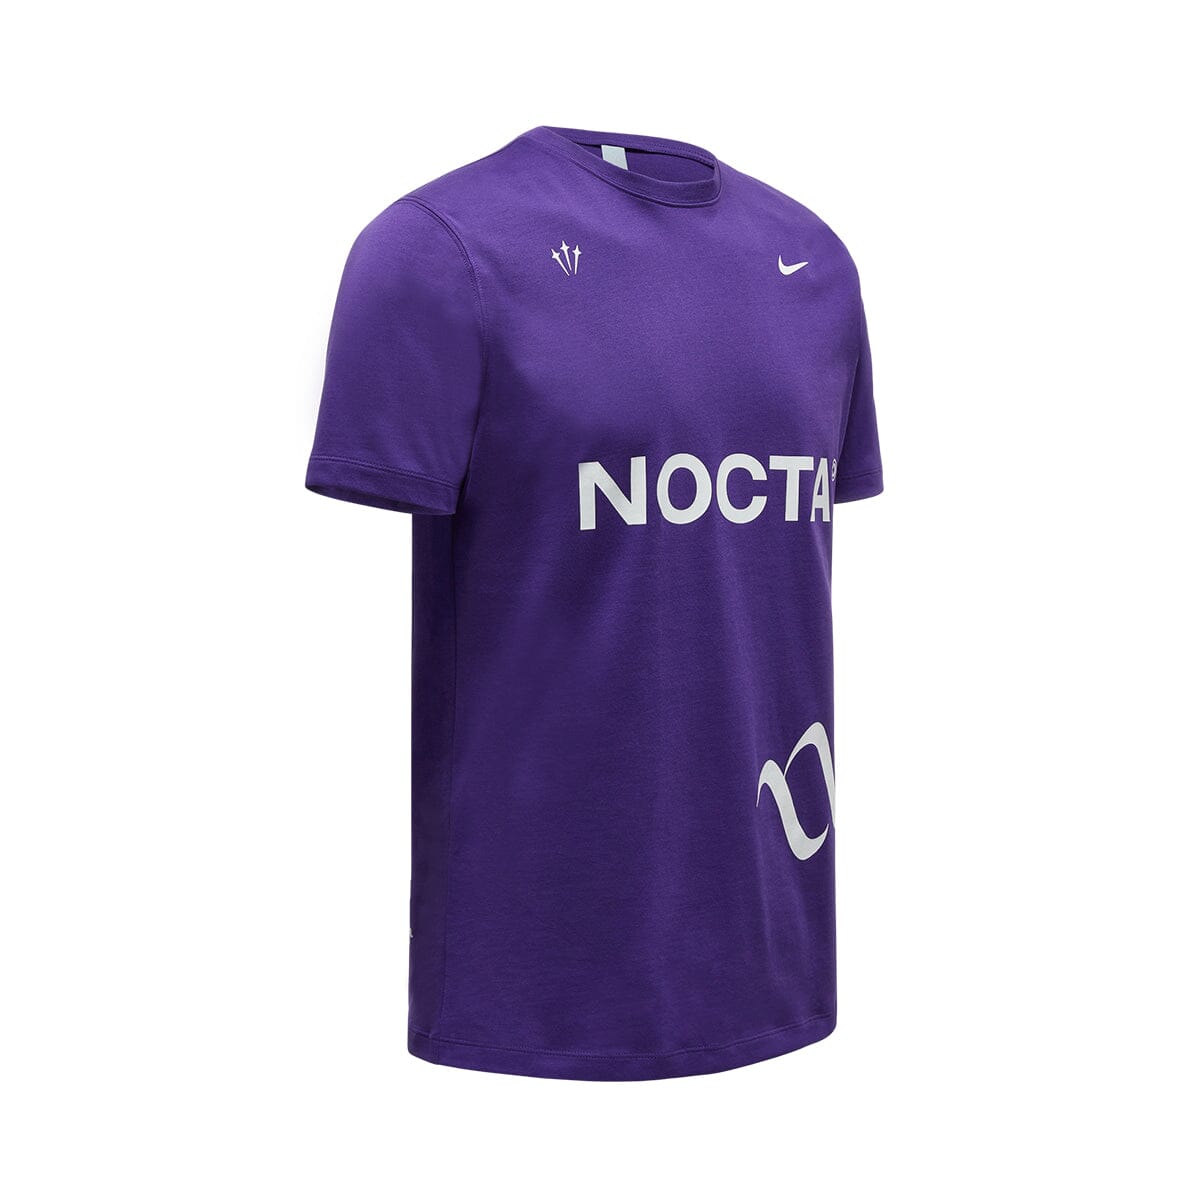 Camiseta Nike x NOCTA Basketball Purple Nocta Blizz Sneakers 